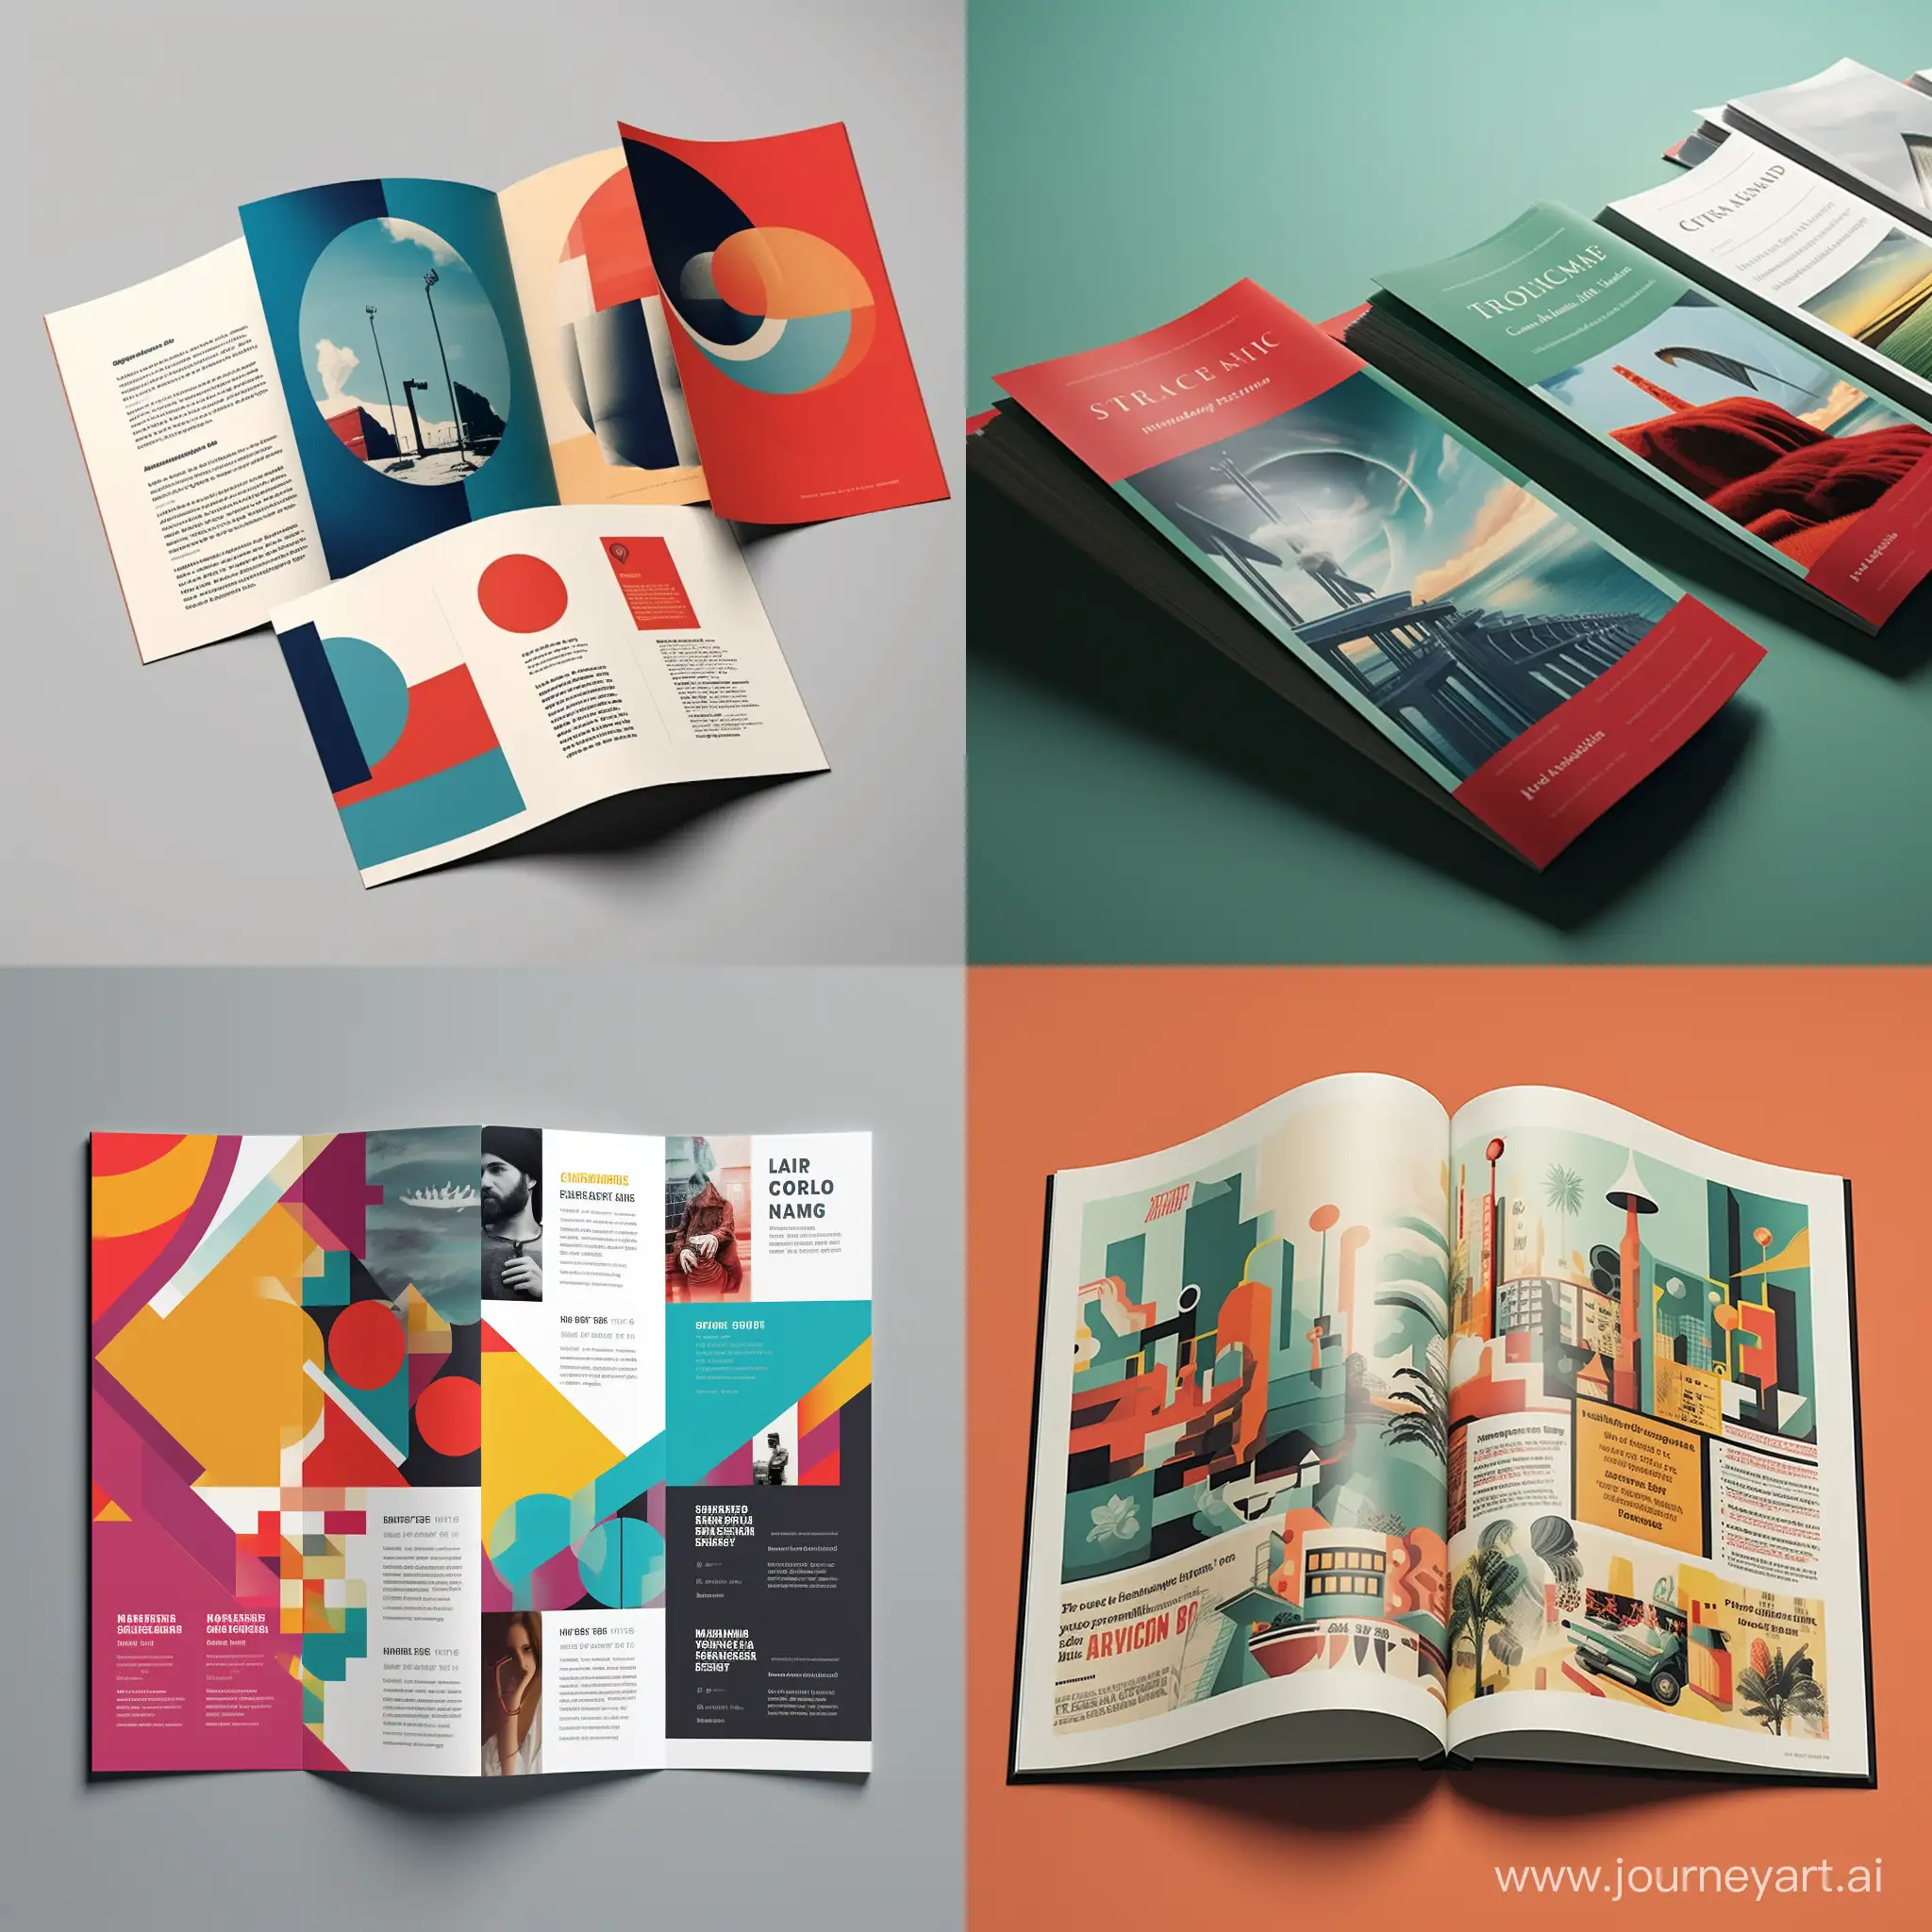 Creative-Advertising-Brochure-Design-with-11-Aspect-Ratio-Unique-AR-Experience